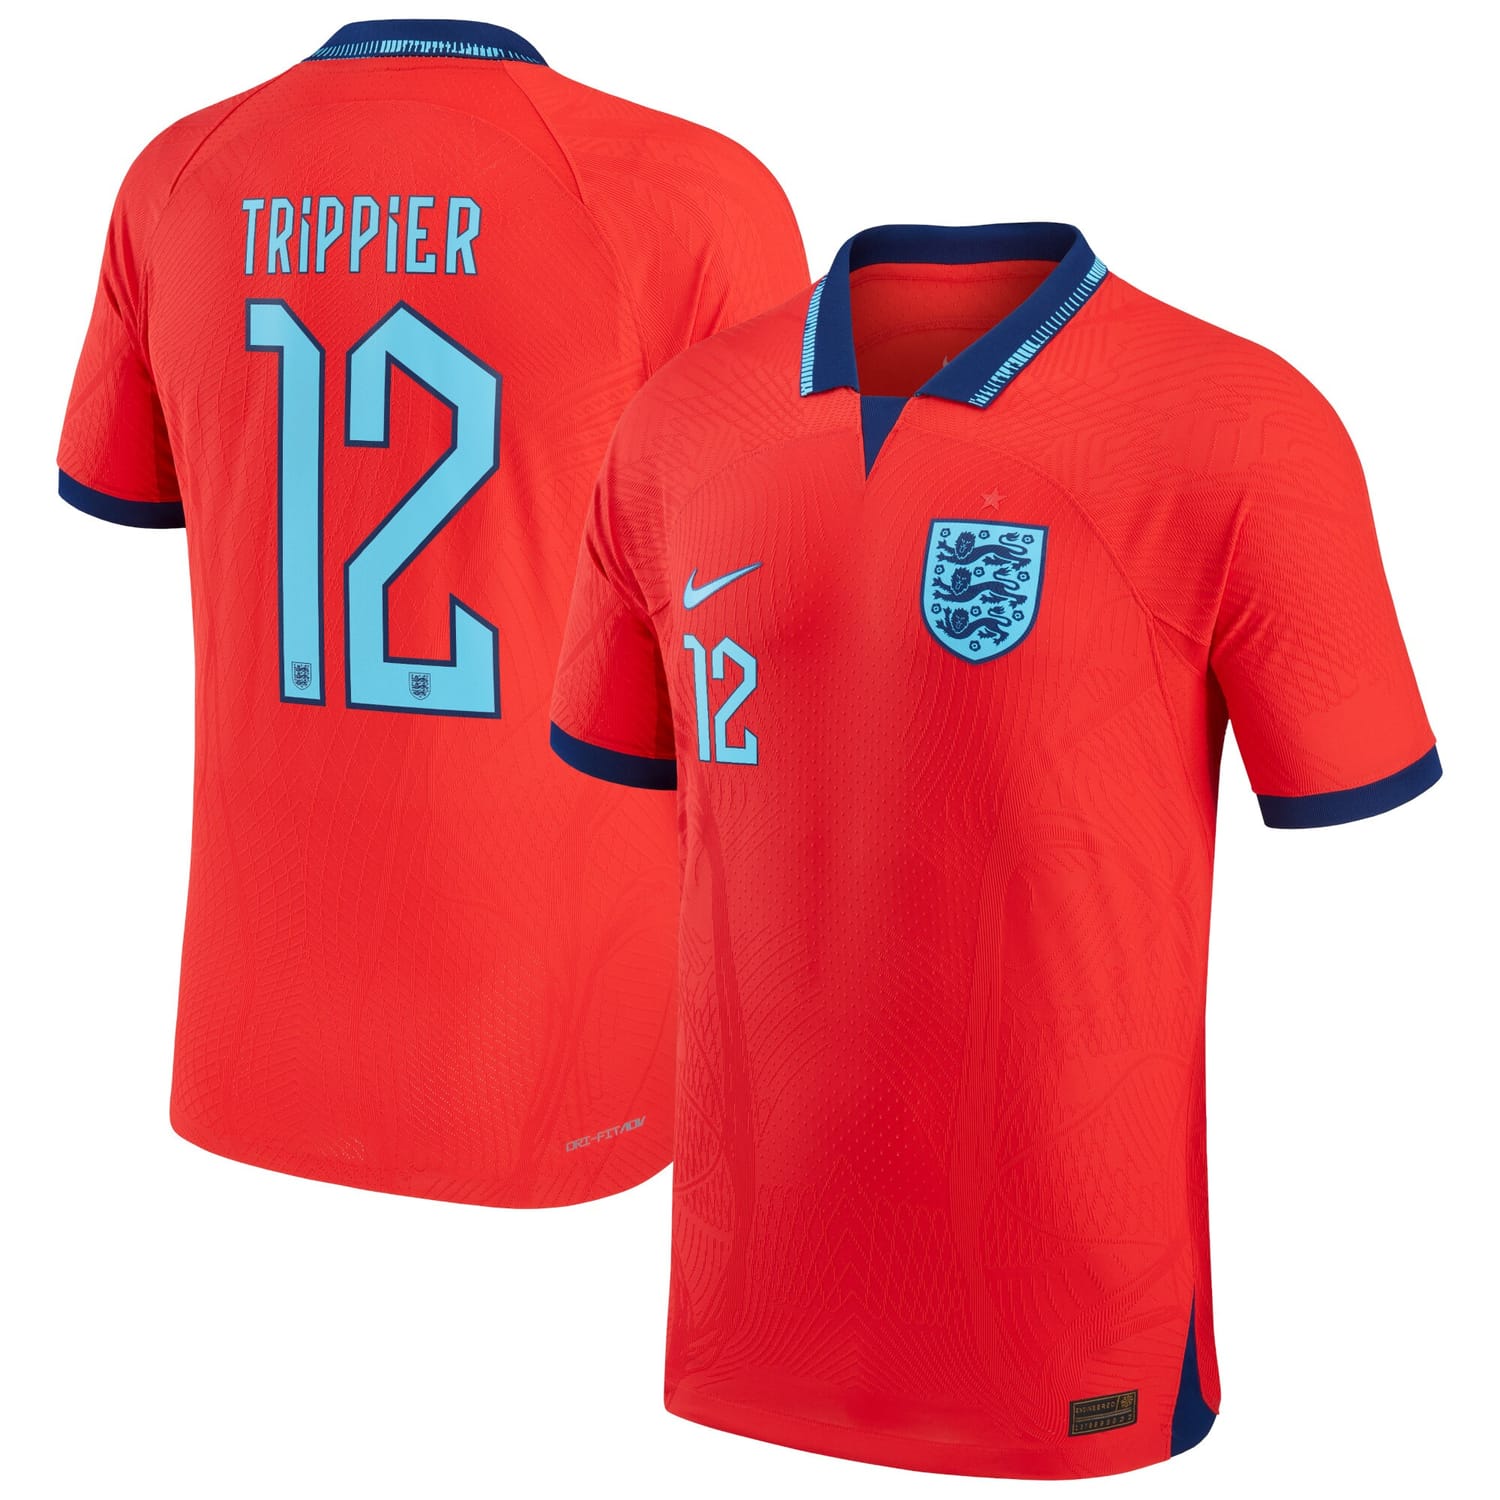 England National Team Away Authentic Jersey Shirt 2022 player Kieran Trippier 12 printing for Men